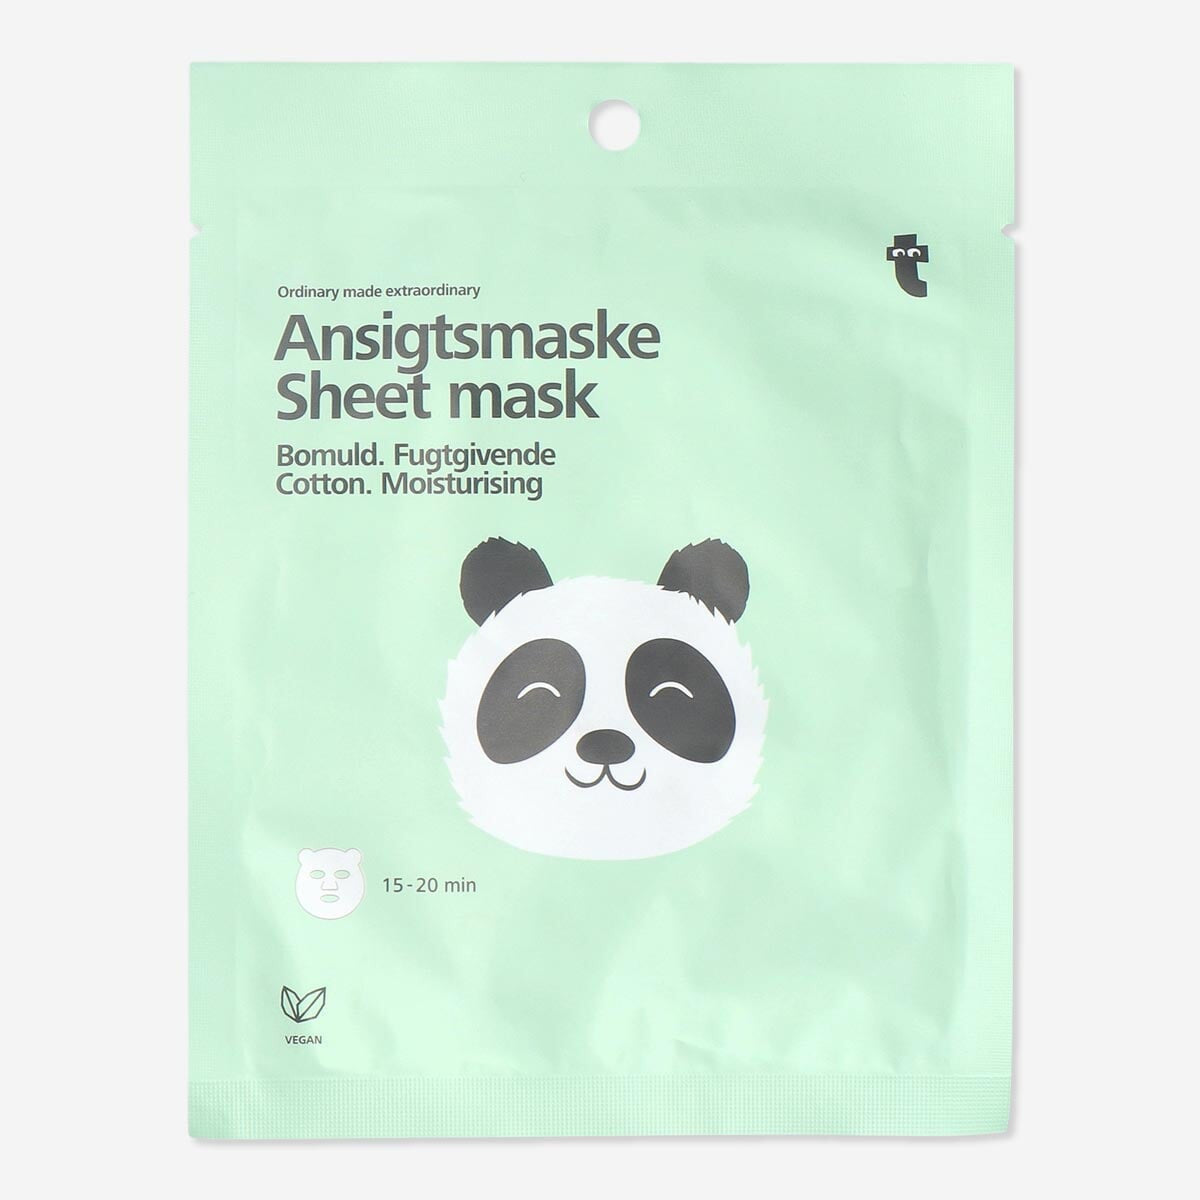 Sheet mask. Moisturising Personal care Flying Tiger Copenhagen 